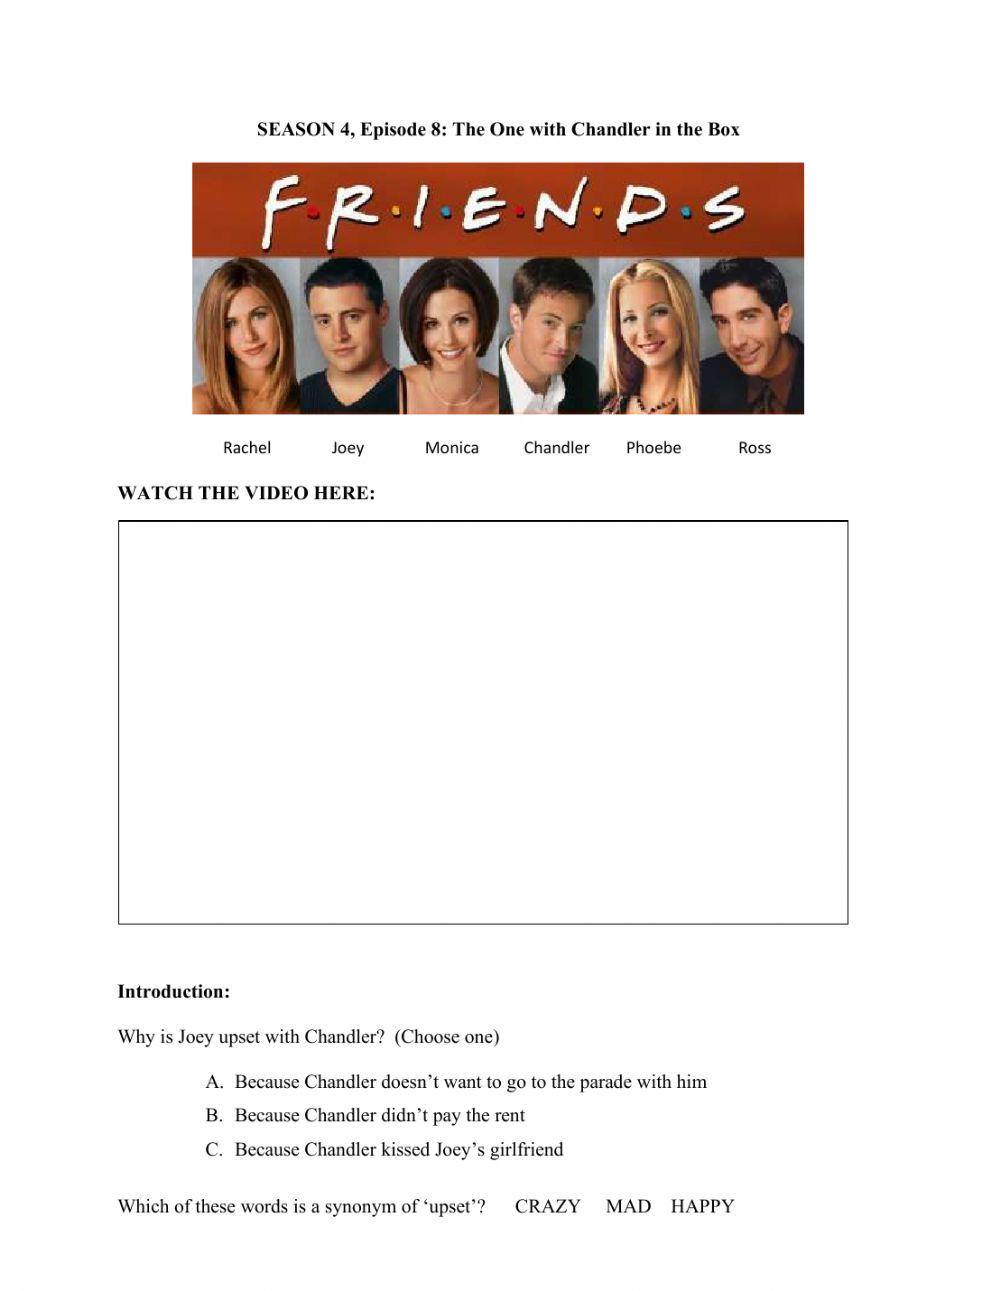 Friends S04E08 CHANDLER IN A BOX